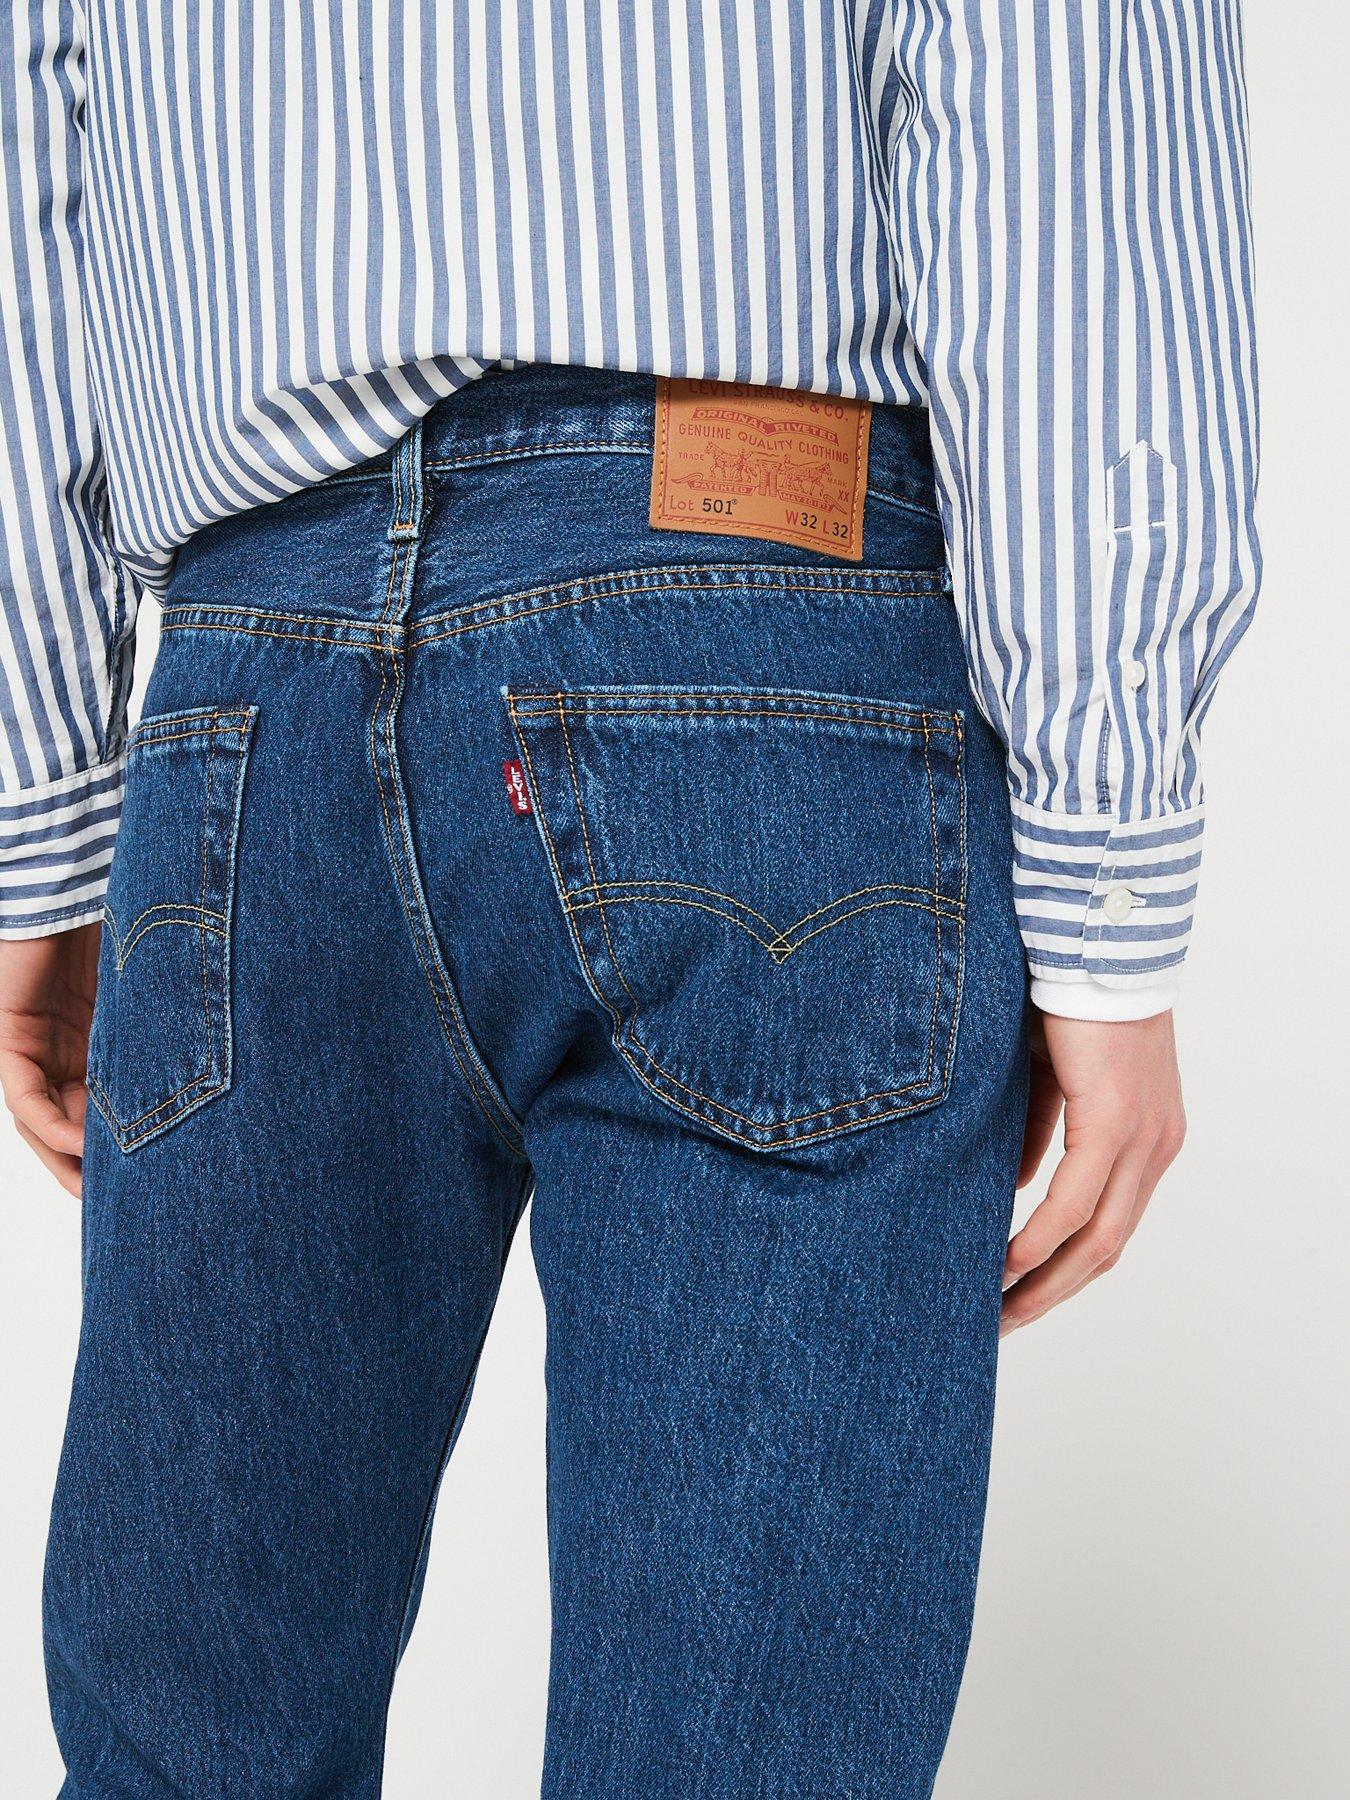 501 Original Fit Jeans - Stonewash 